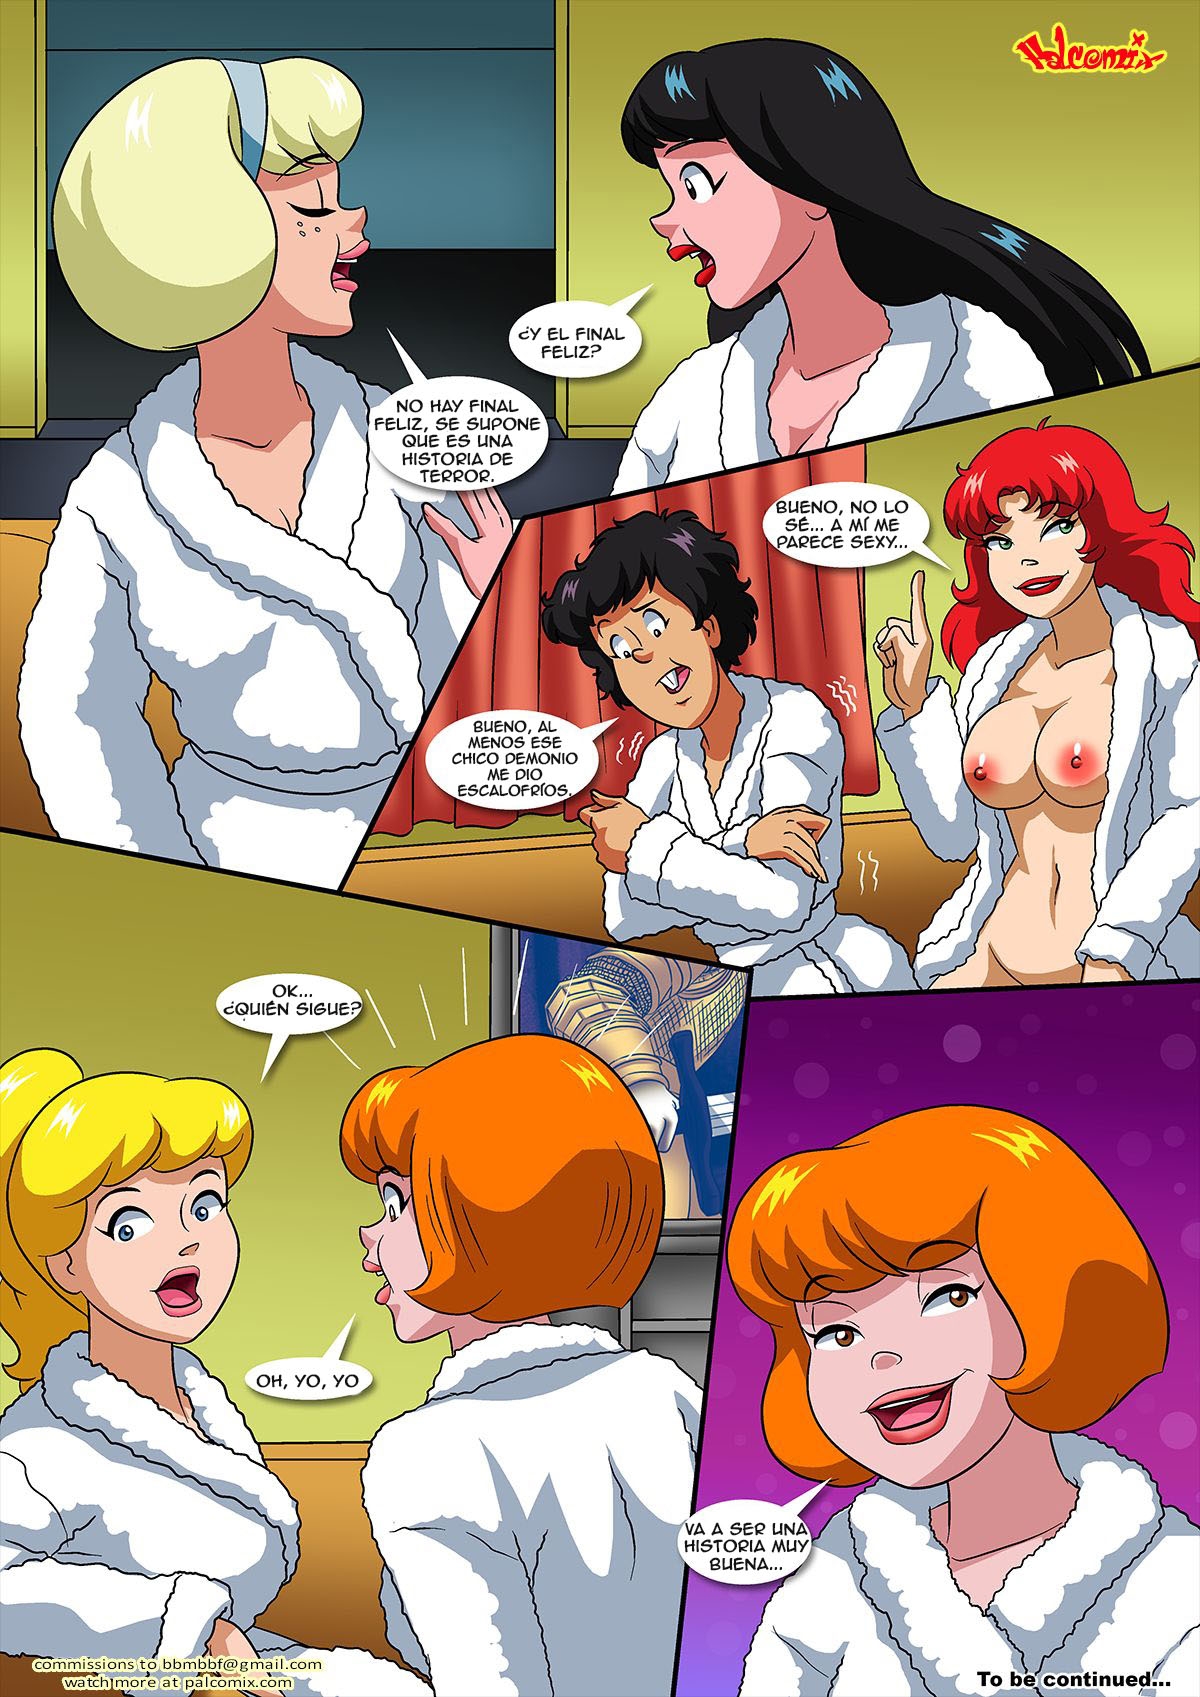 [Palcomix] Tales from Riverdale's Girls/Historias de las chicas de Riverdale  #2 (Archie, Josie and the Pussycats) [Spanish] 39